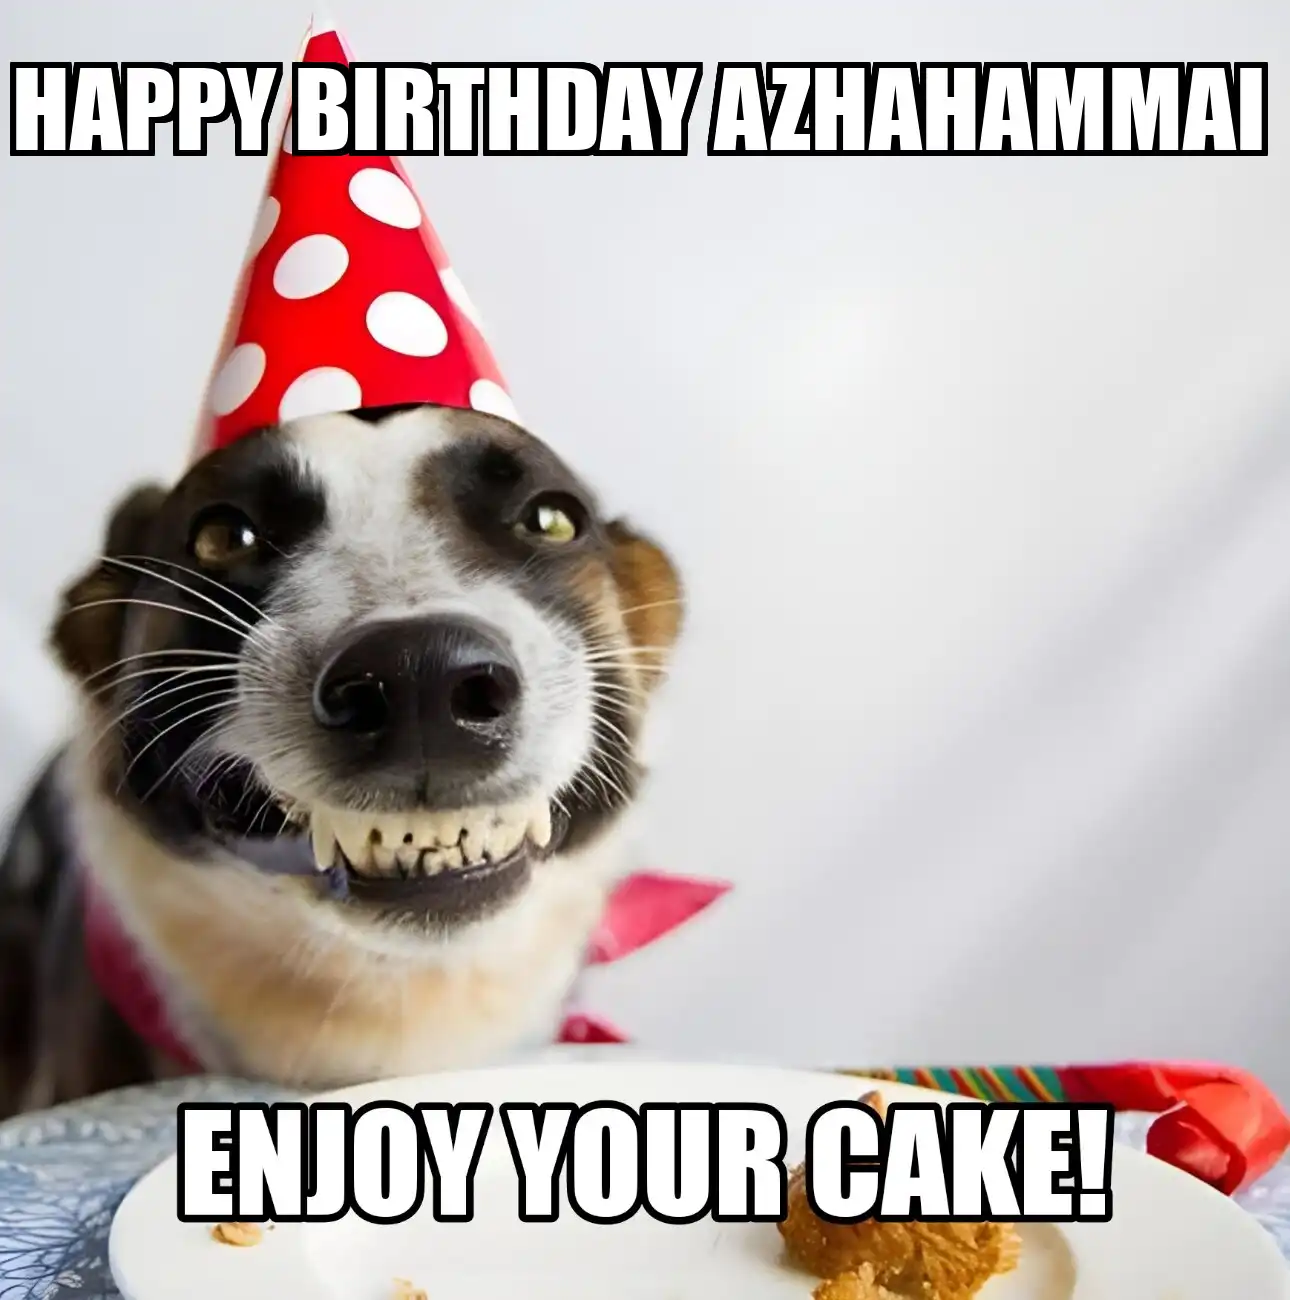 Happy Birthday Azhahammai Enjoy Your Cake Dog Meme